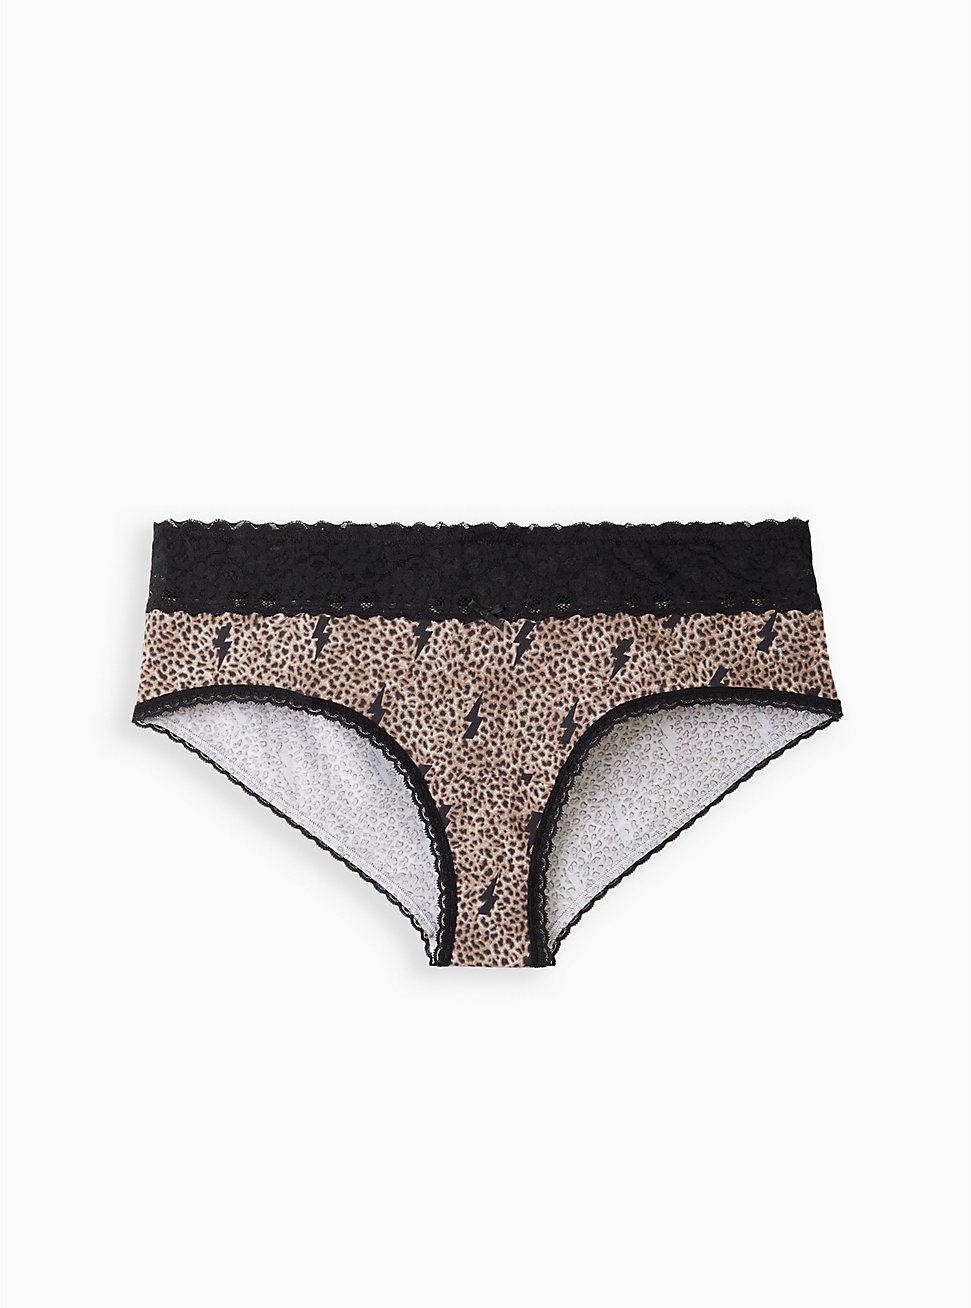 Cheeky Panty - Wide Lace Cotton Leopard Bolts, LEOPARD - TAN, hi-res